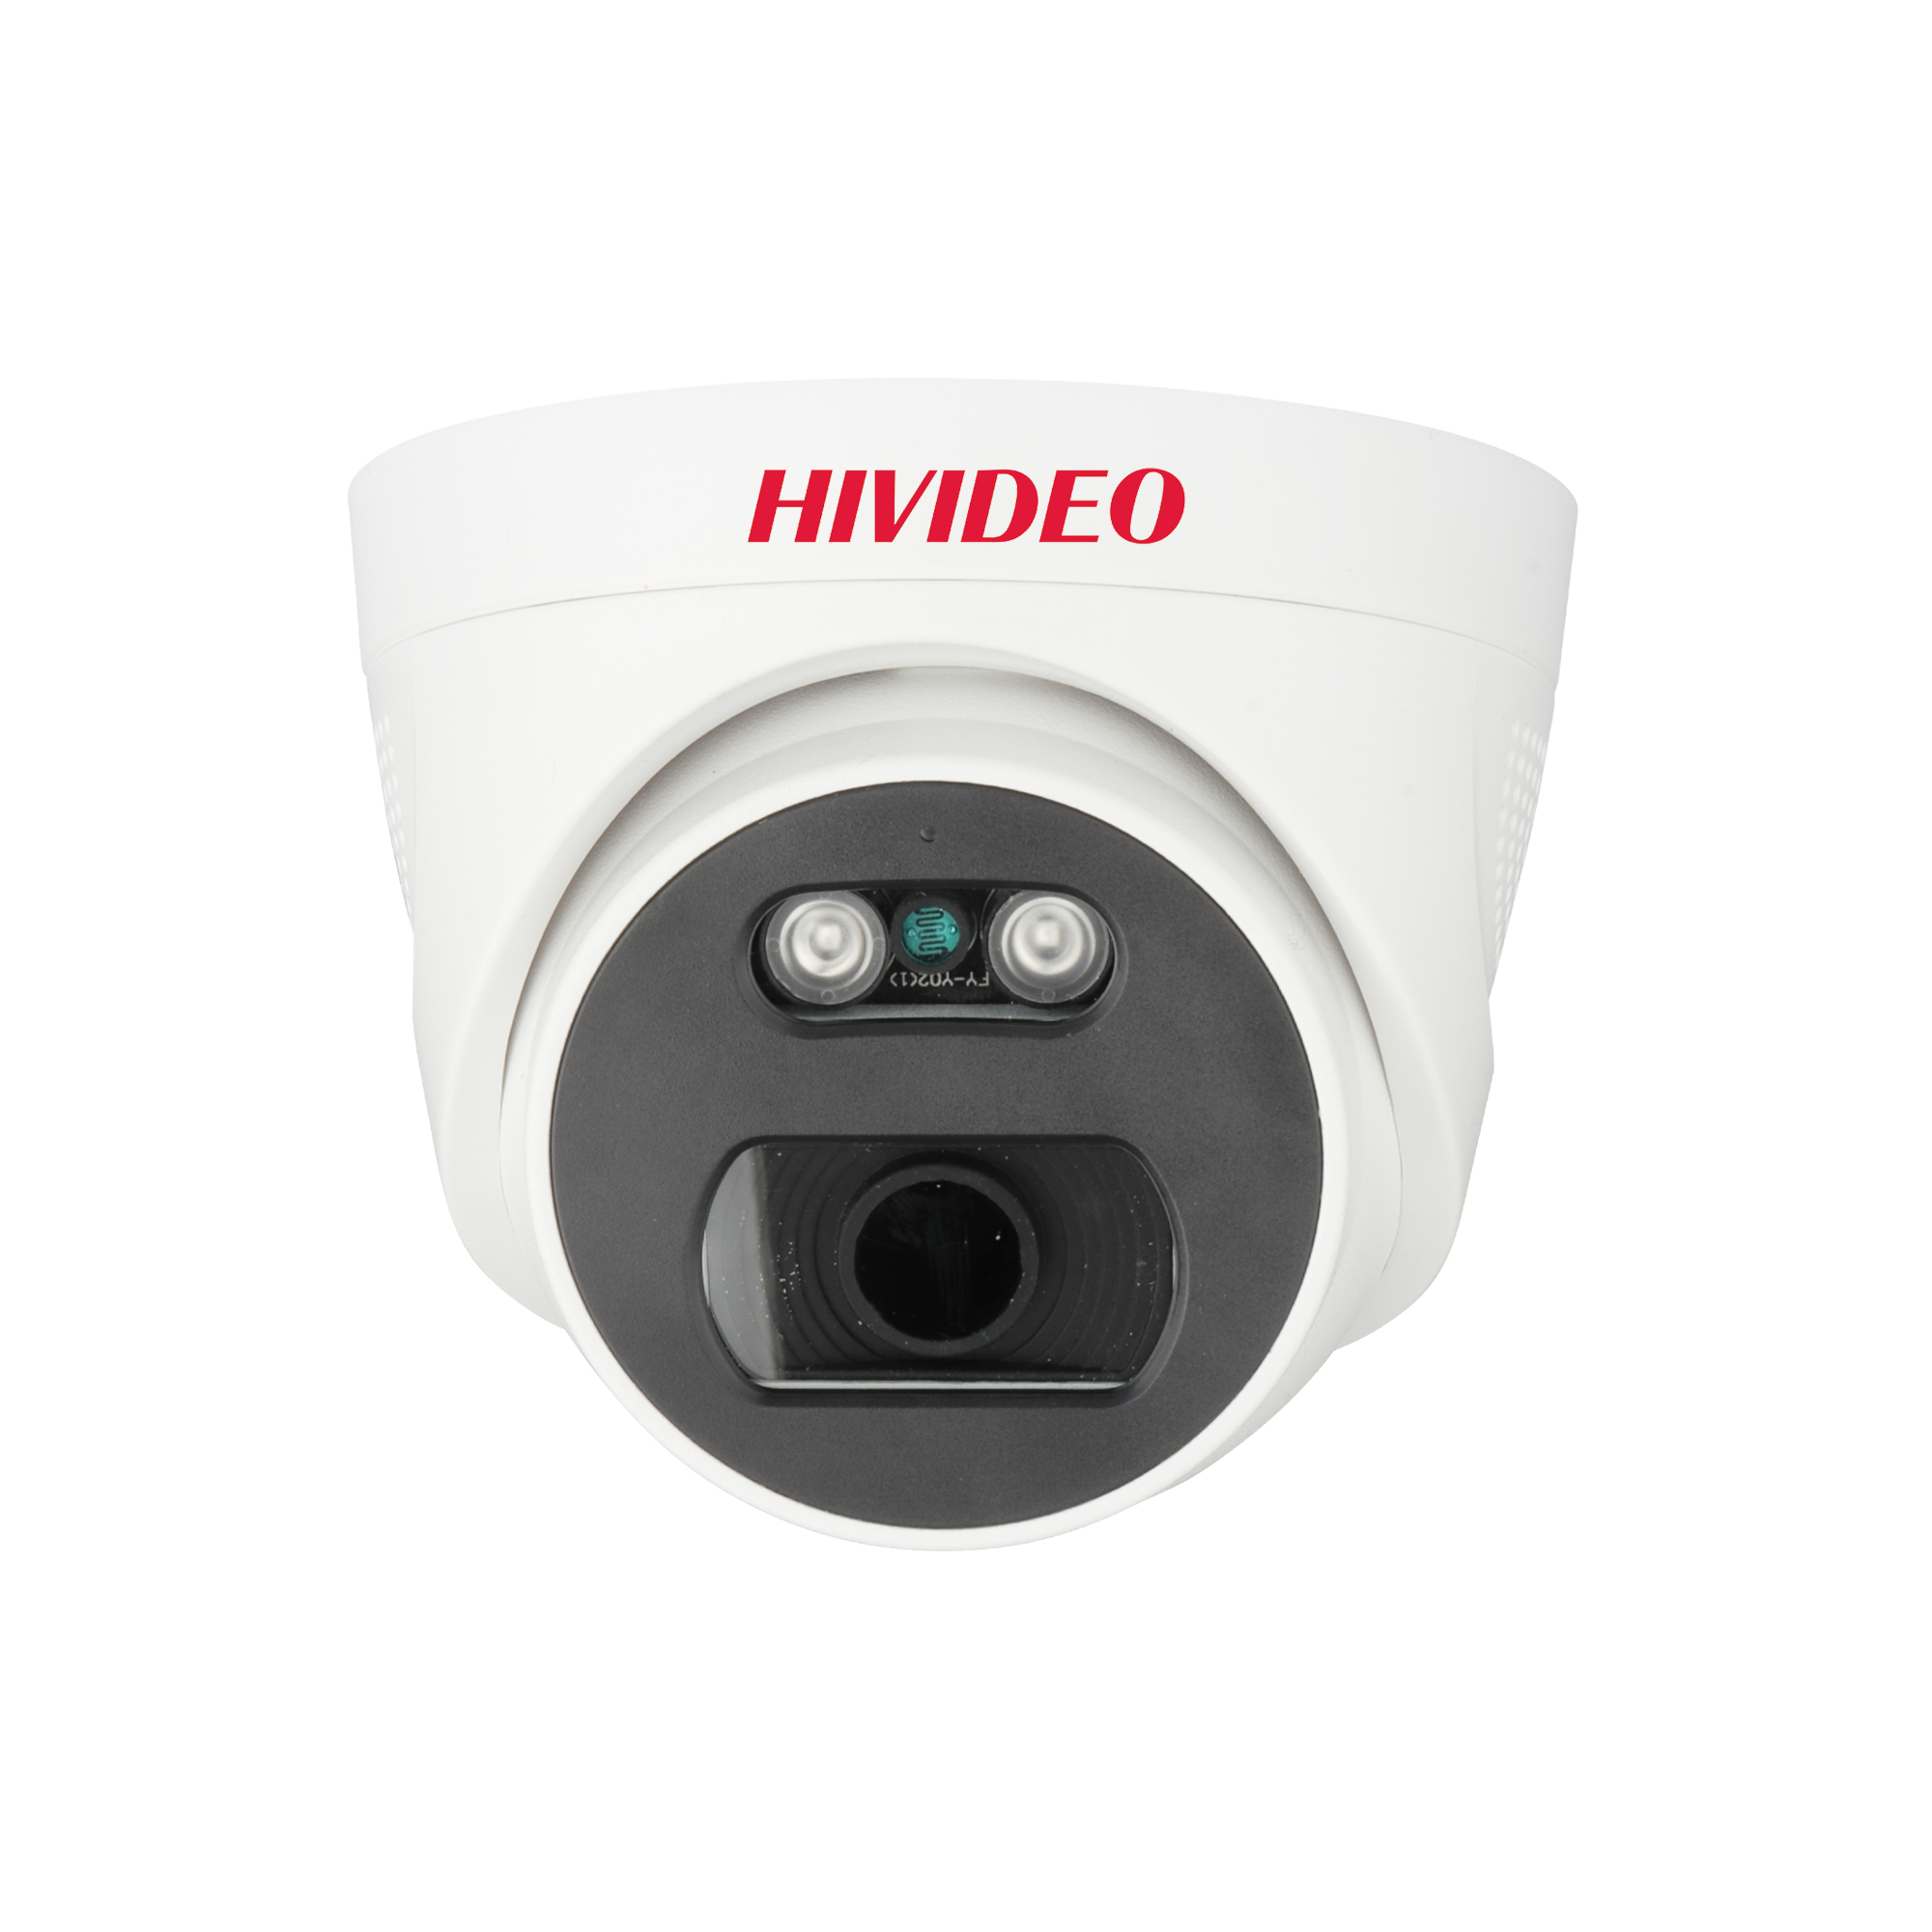 دوربین مداربسته دام HIVIDEO مدل HI-D73604 IP